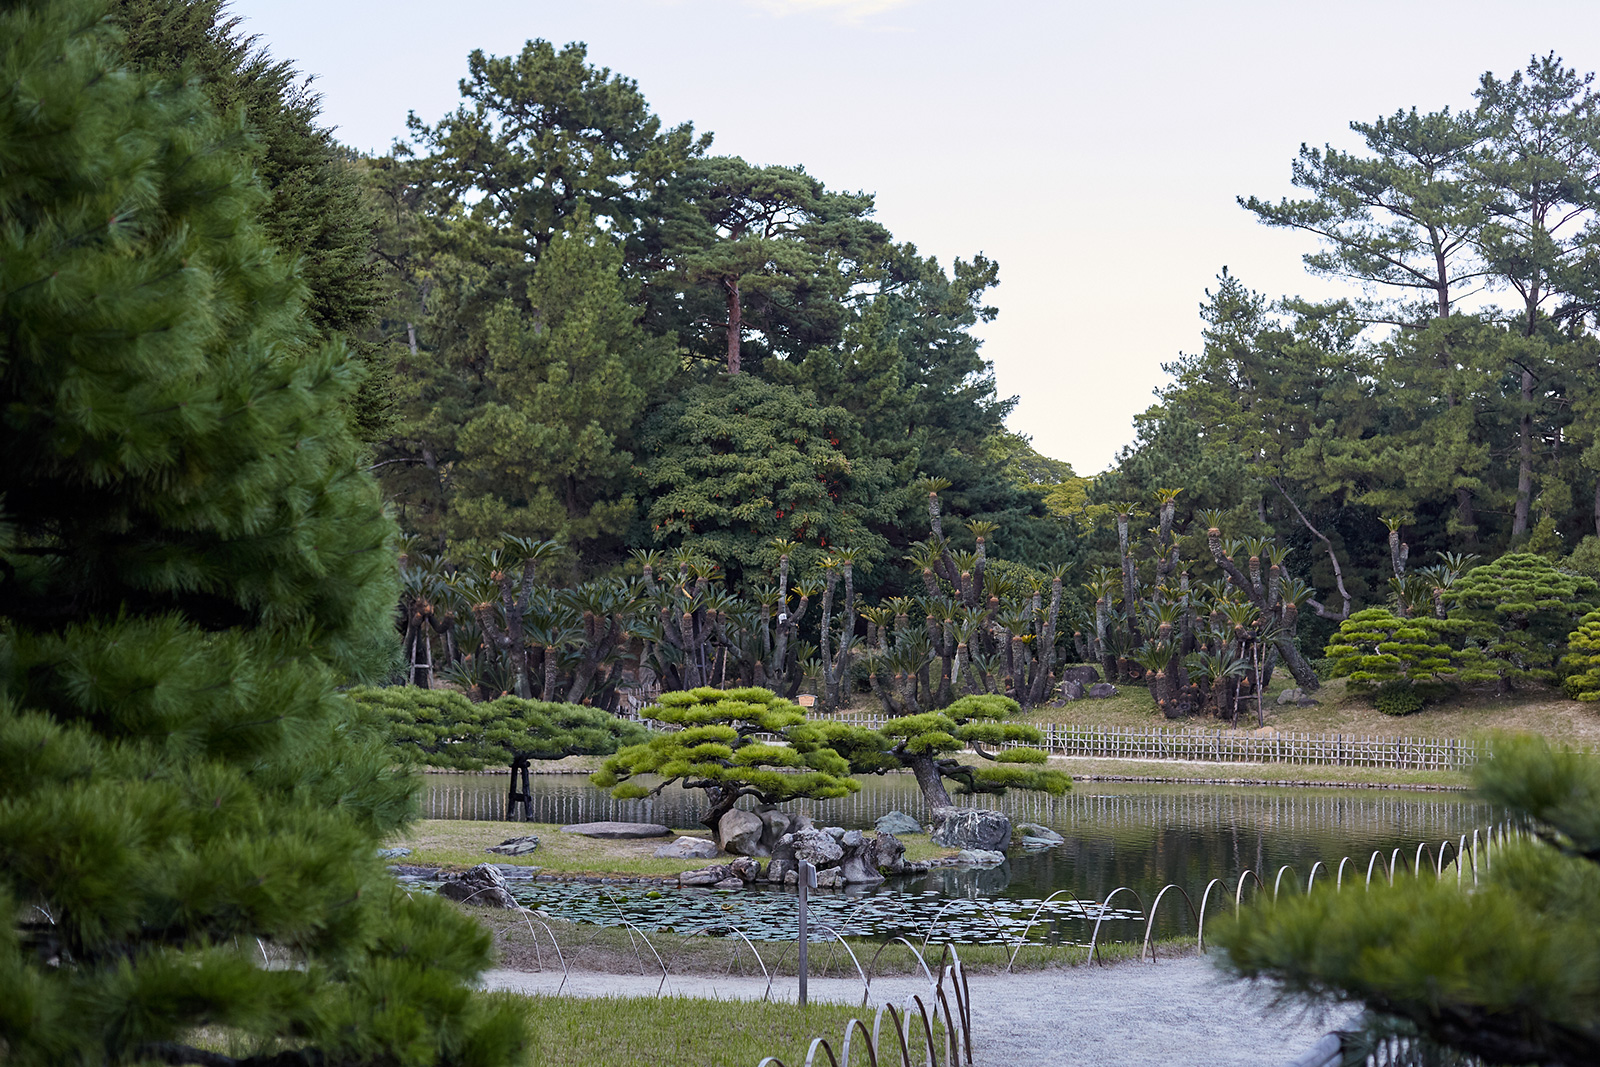 Japan’s Ritsurin Garden offers a taste of timeless beauty at its Kikugetsutei teahouse